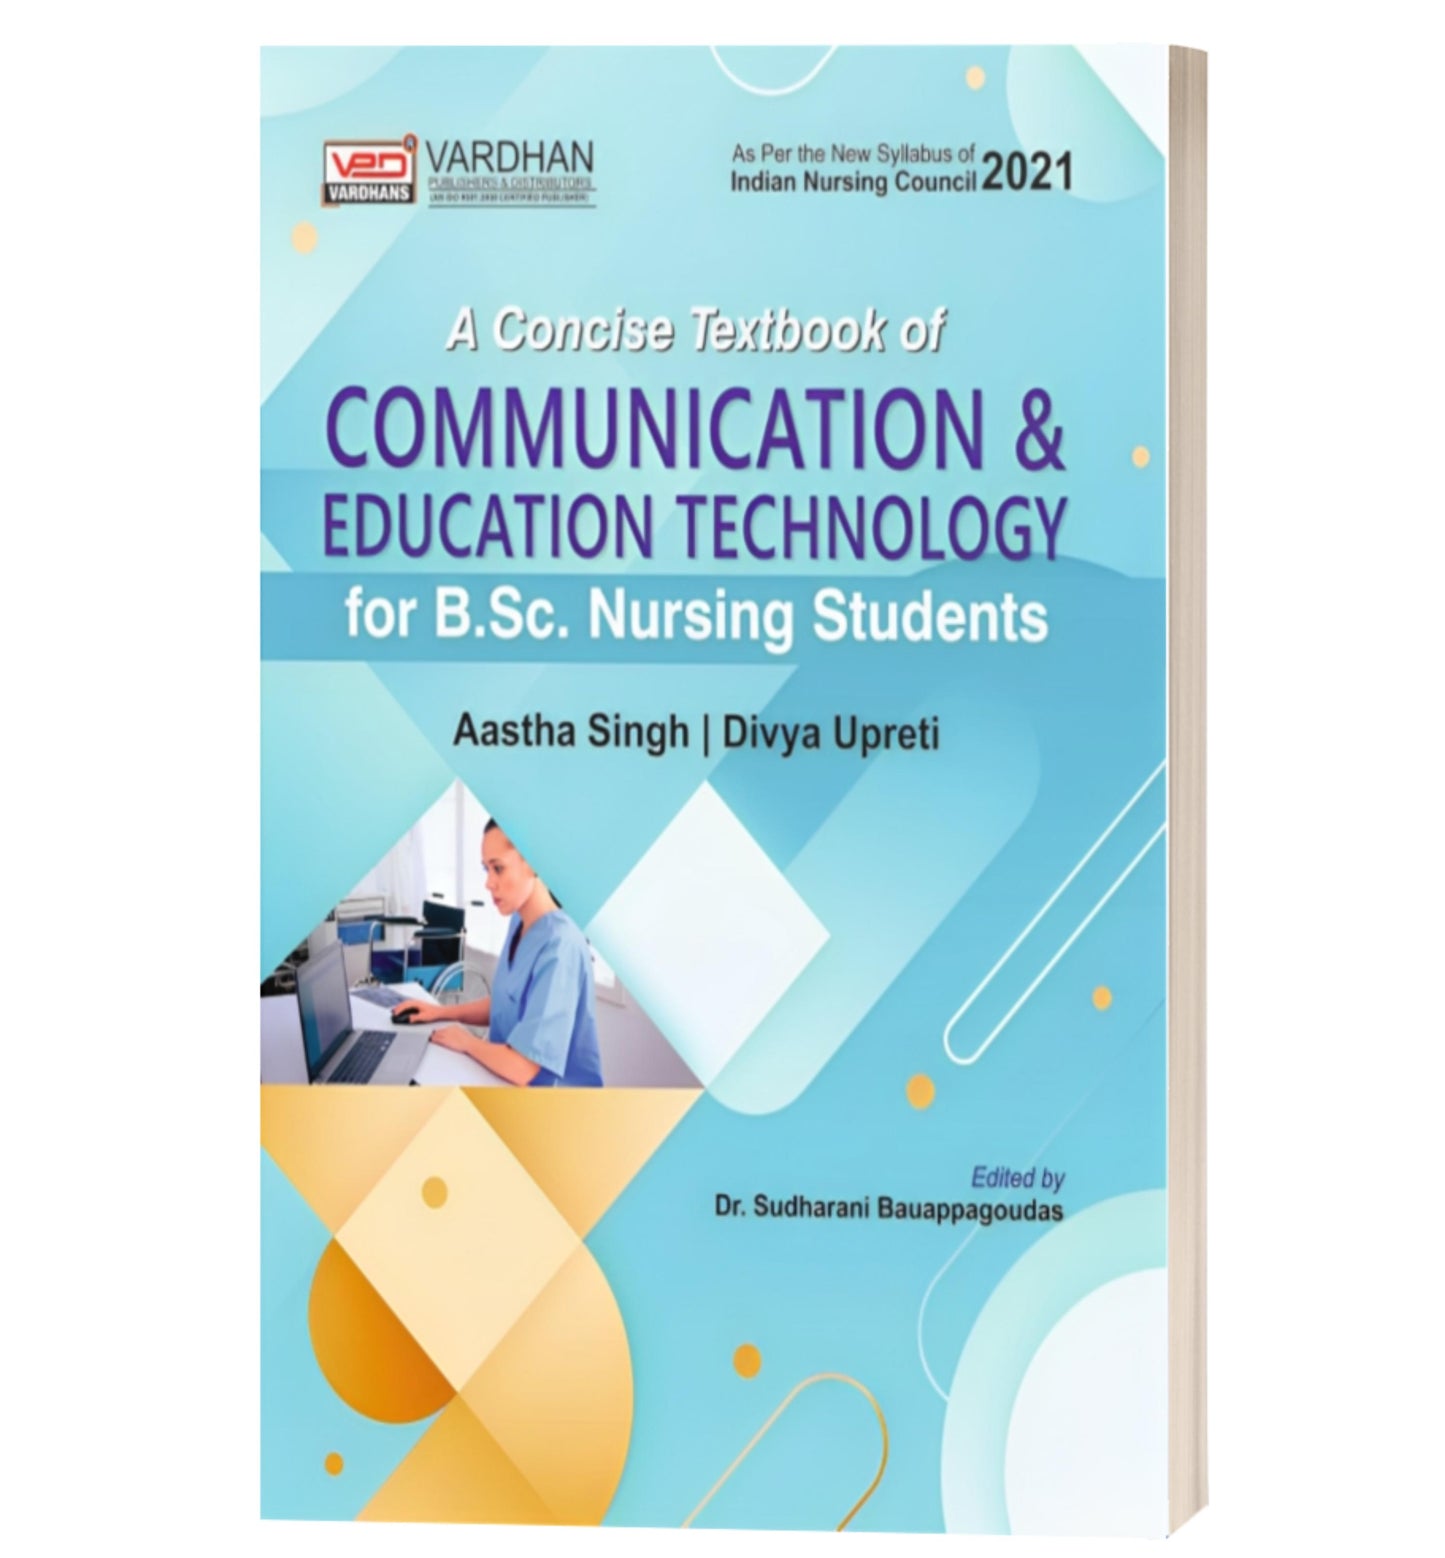 Communication & Education Technology